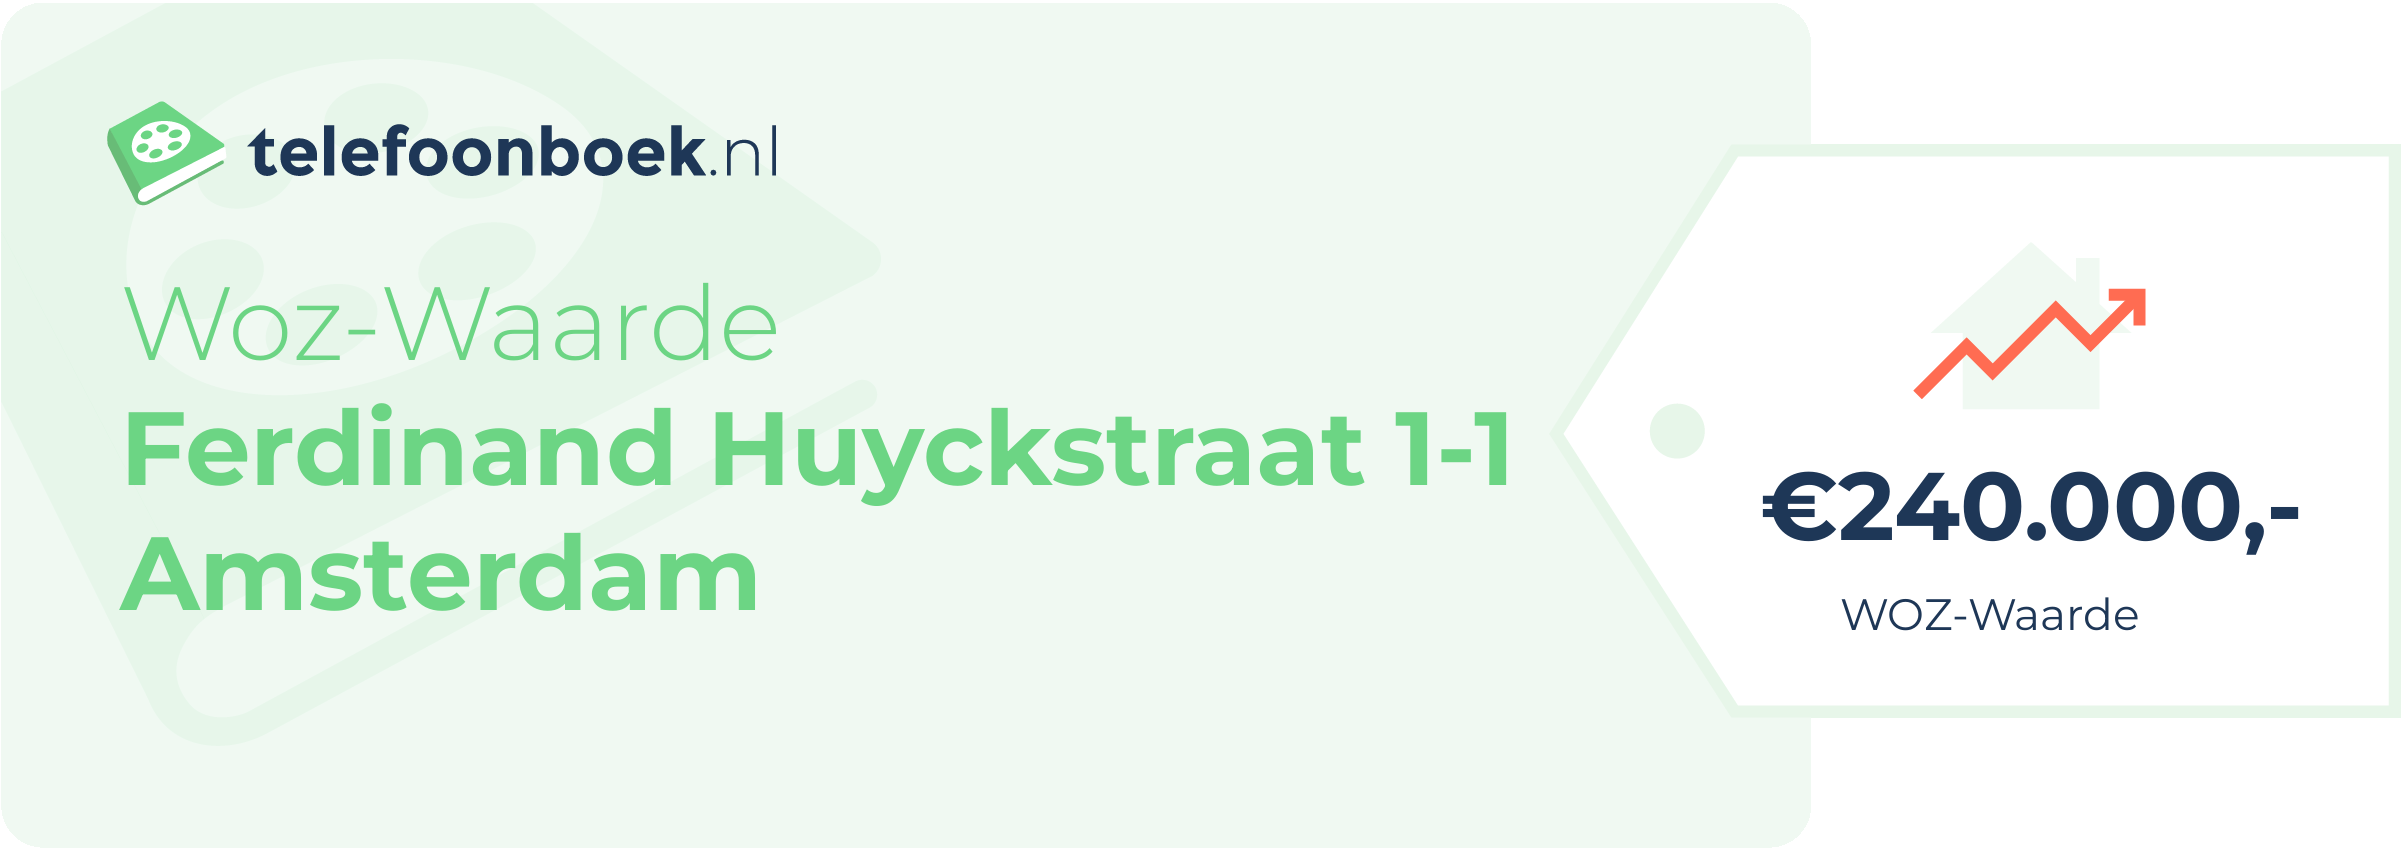 WOZ-waarde Ferdinand Huyckstraat 1-1 Amsterdam